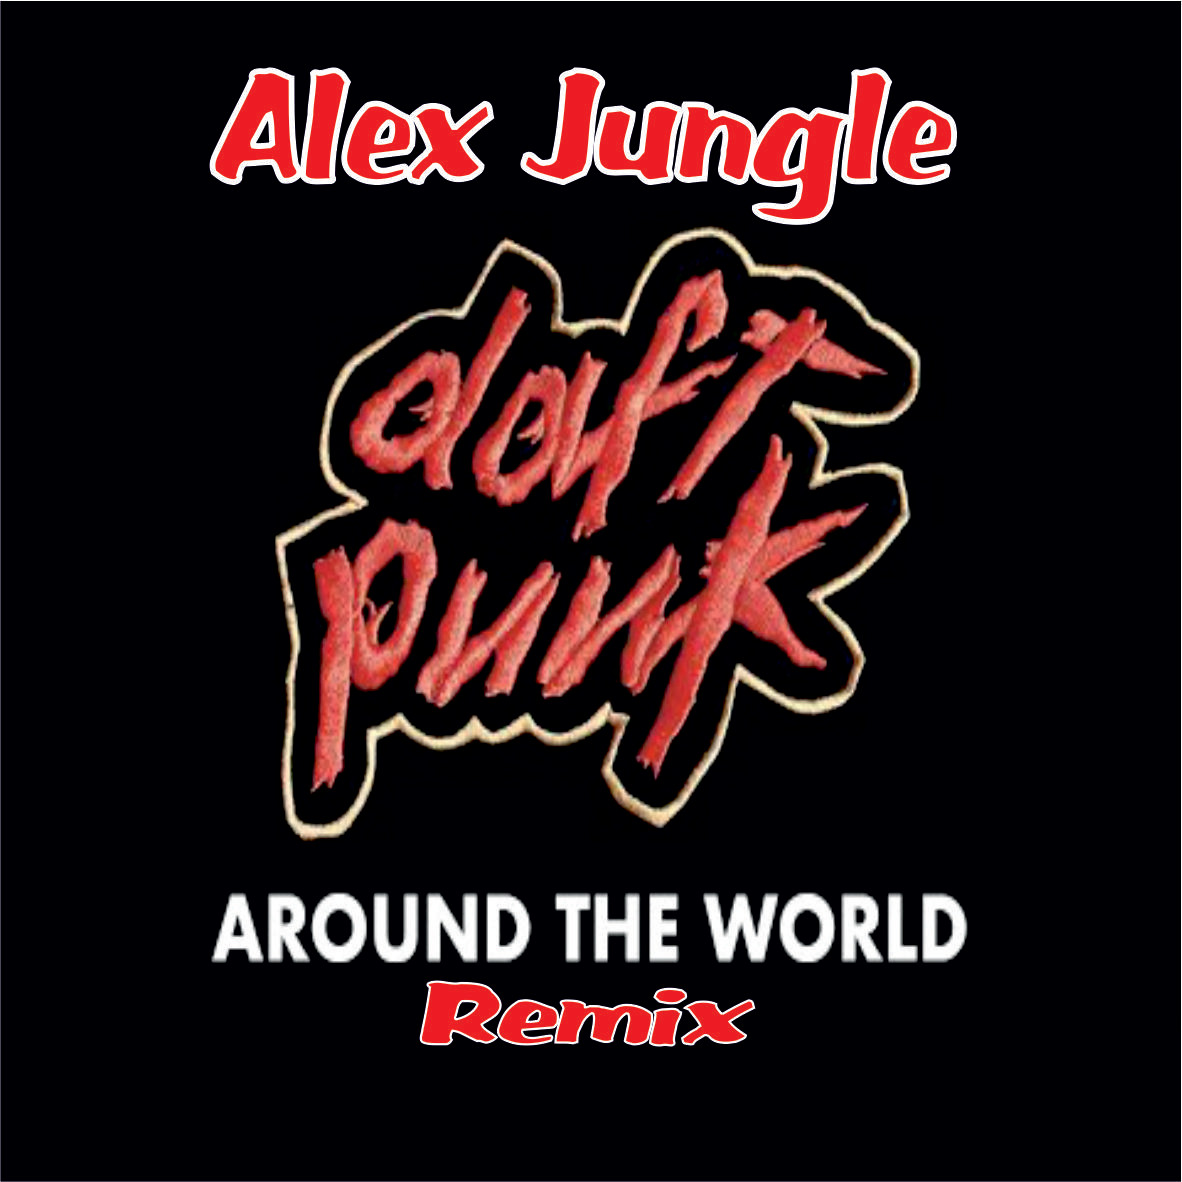 Alex world песни. Дафт панк эраунд зе ворлд. Alex World Music.